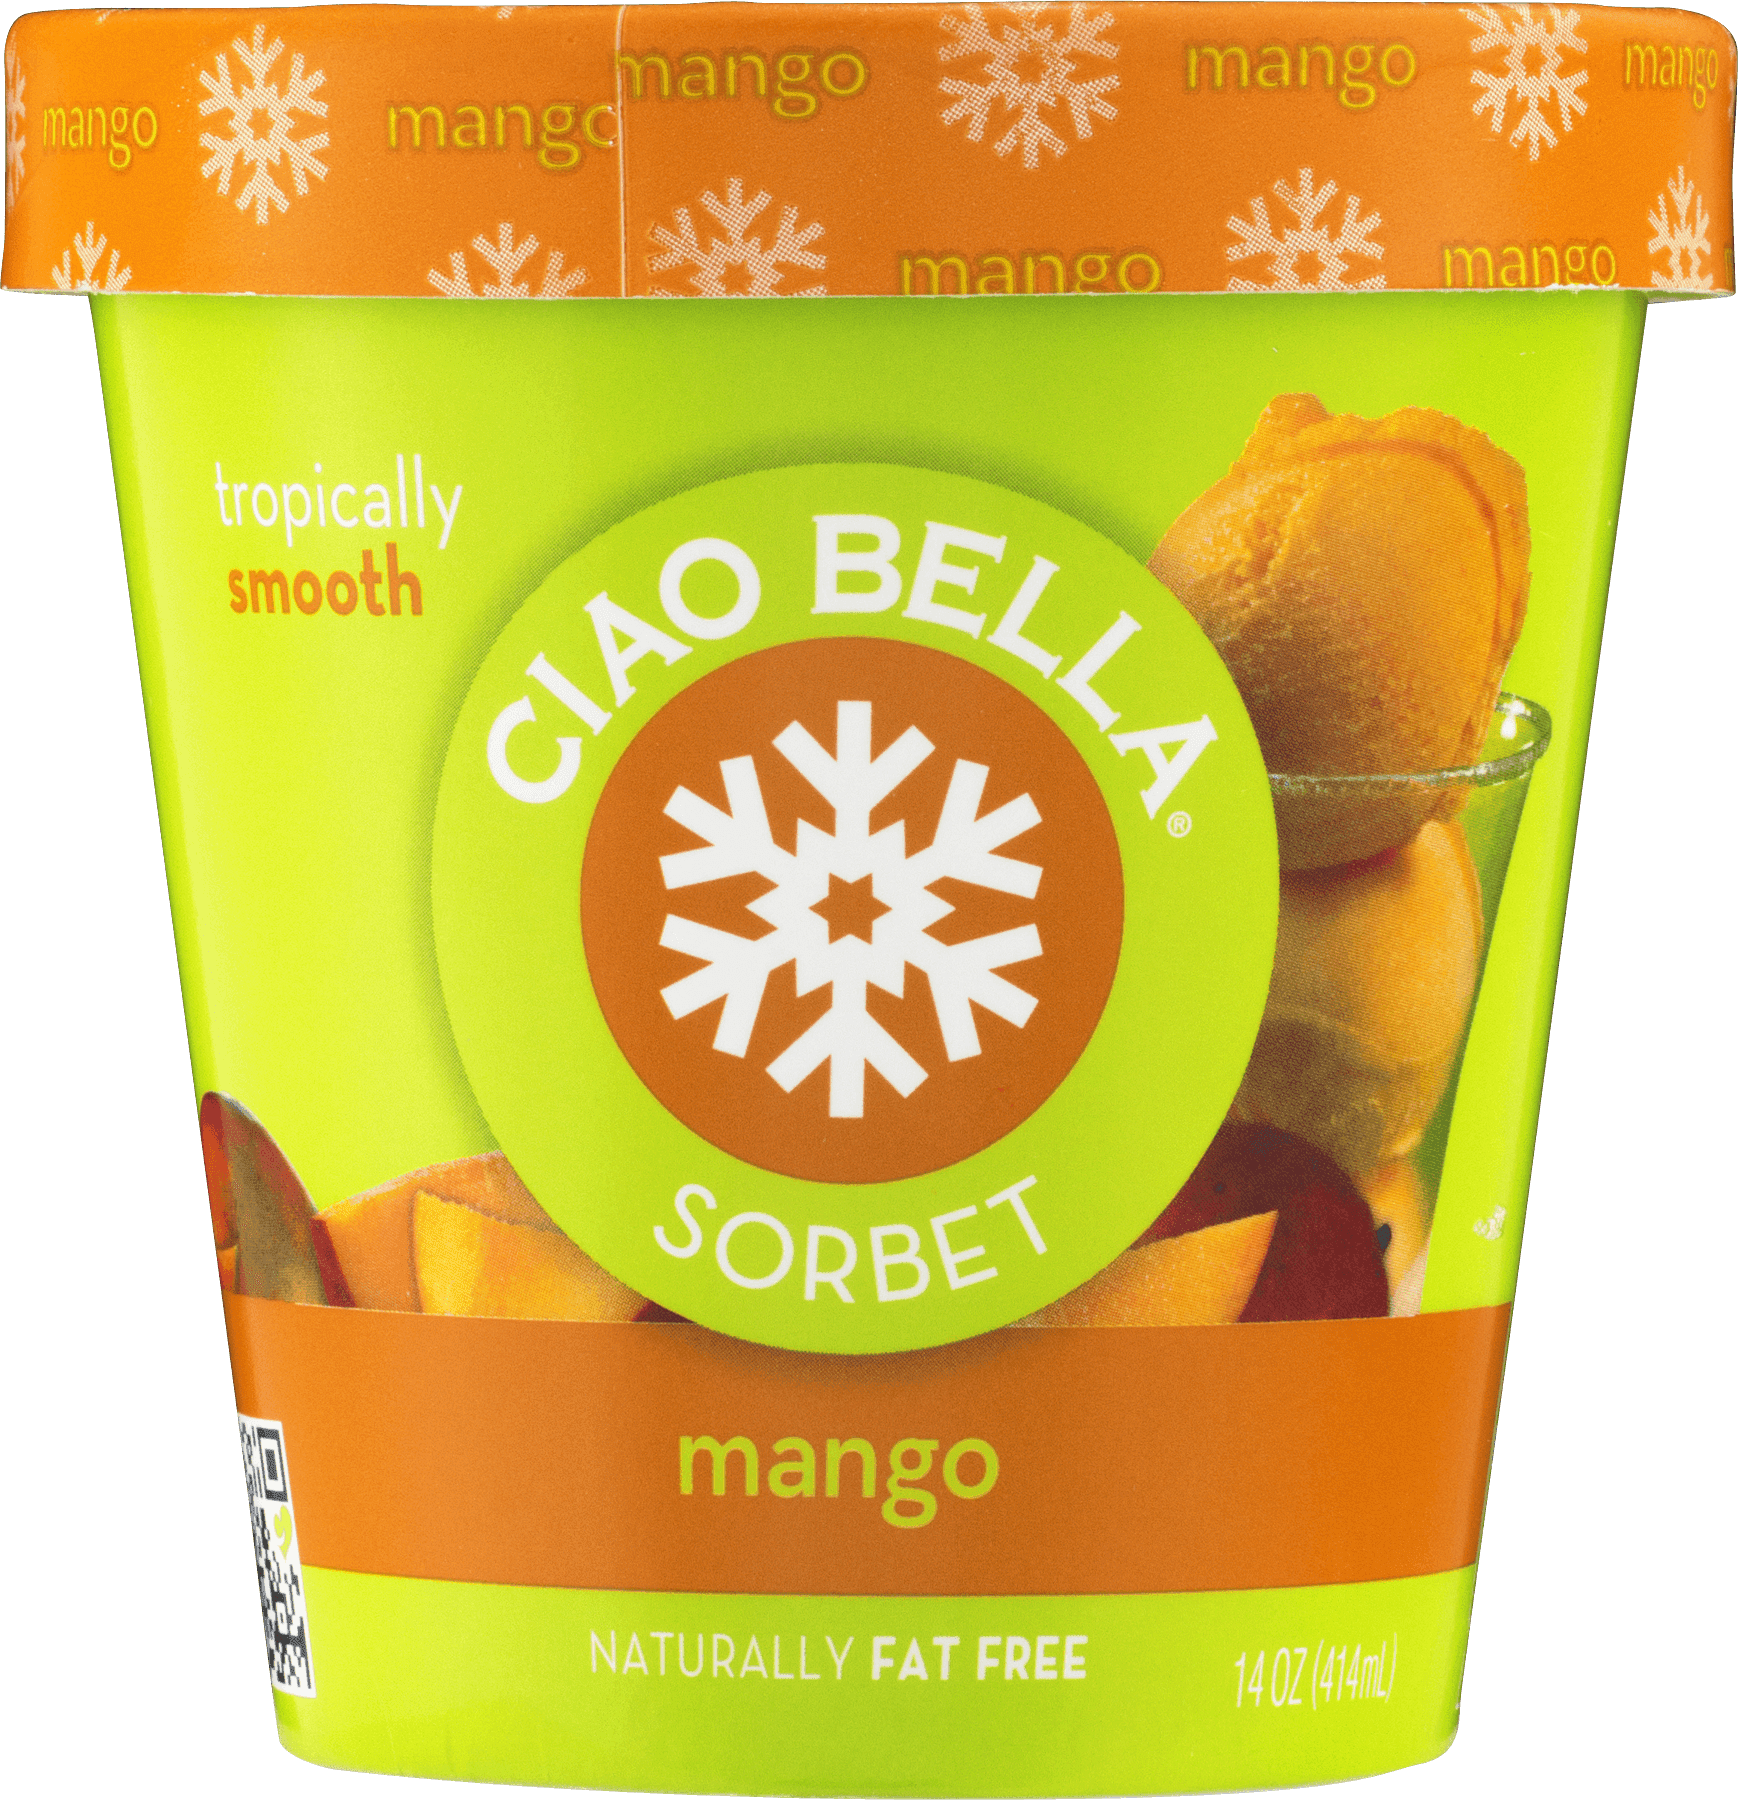 Ciao Bella Sorbetto Reviews & Info (Purely Vegan Flavors)